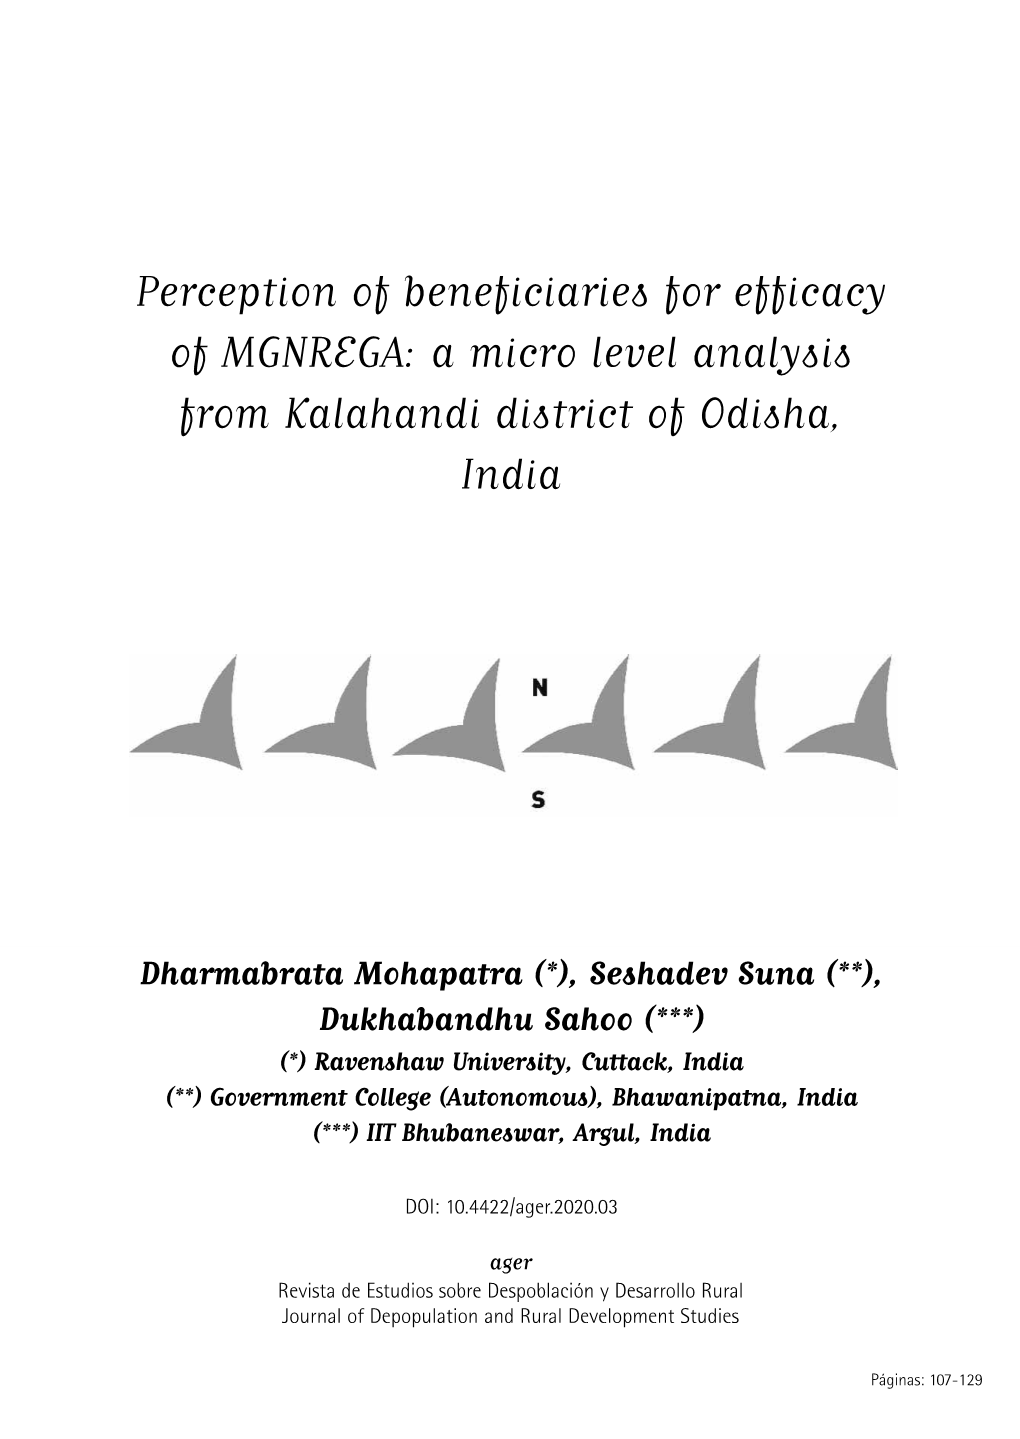 A Micro Level Analysis from Kalahandi District of Odisha, India